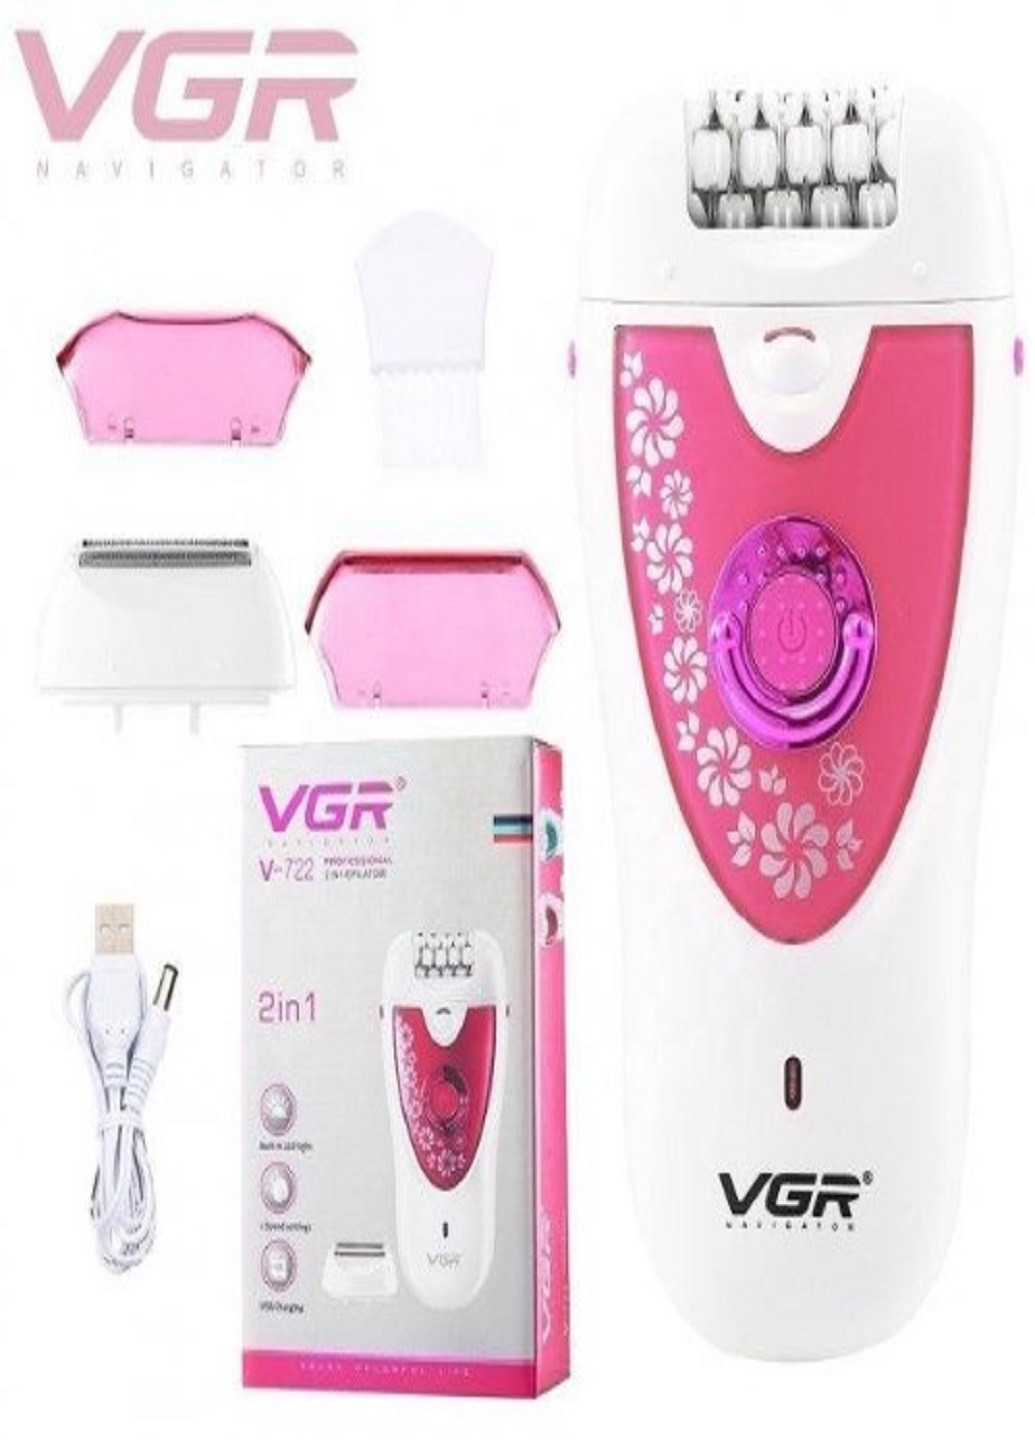 Женский эпилятор VGR V-722 аккумуляторный Розовый VTech (259906232)